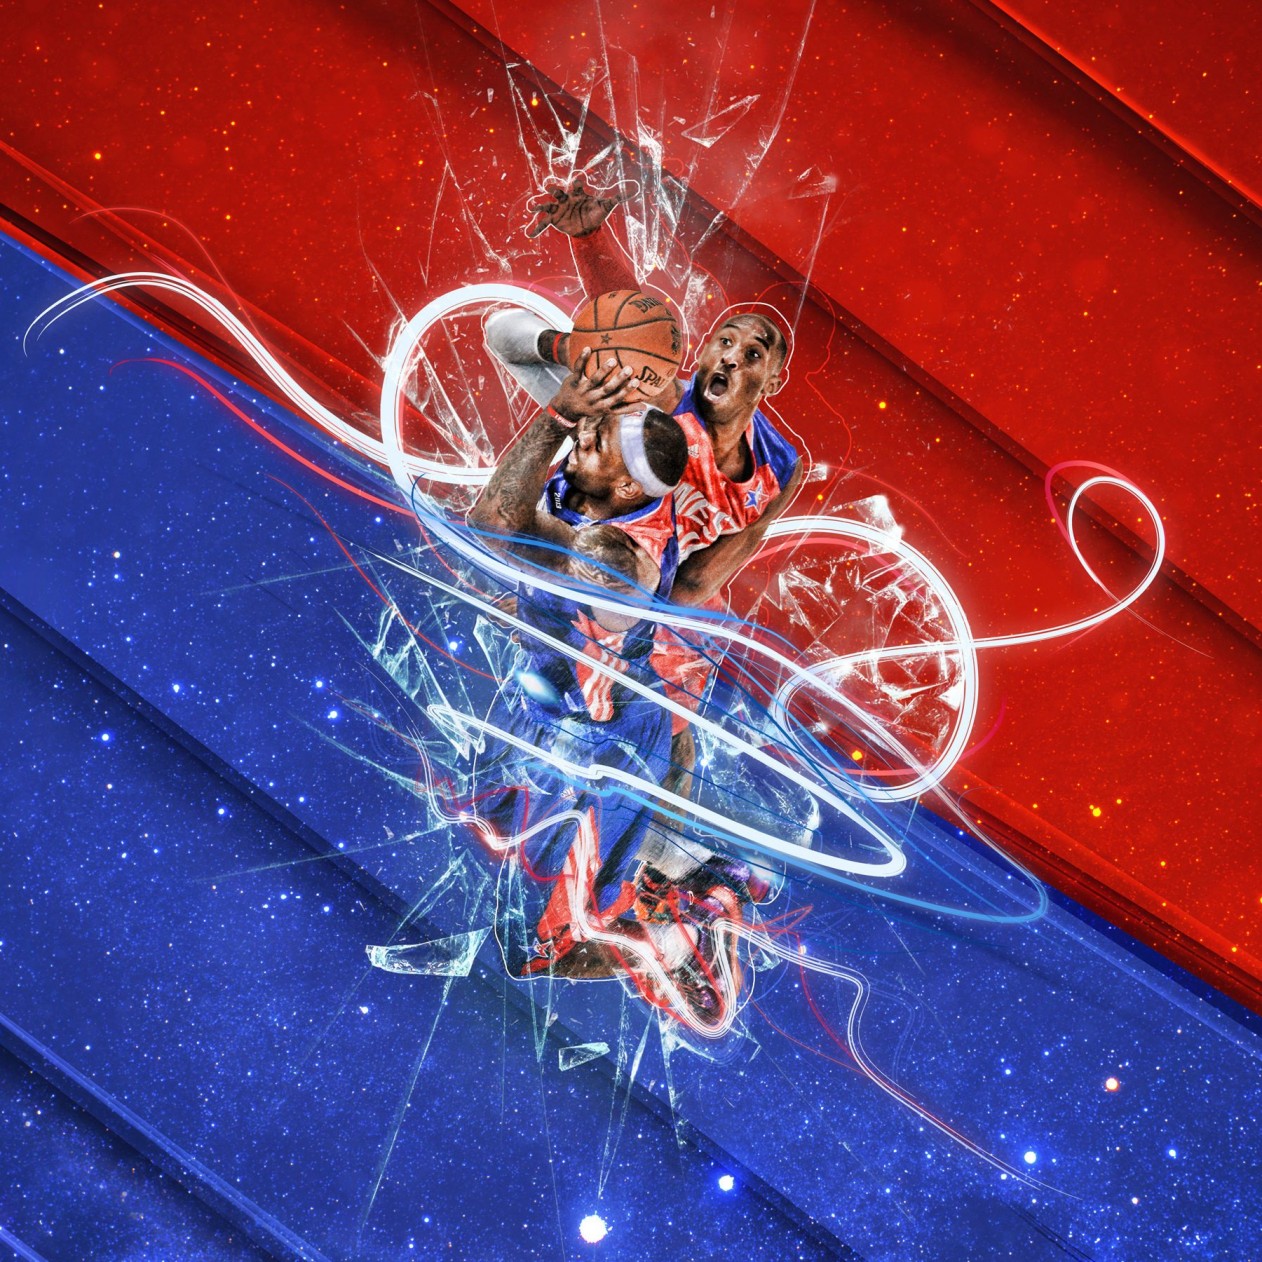 LeBron James Vs Kobe Bryant - NBA - Basketball Wallpaper for Apple iPad mini